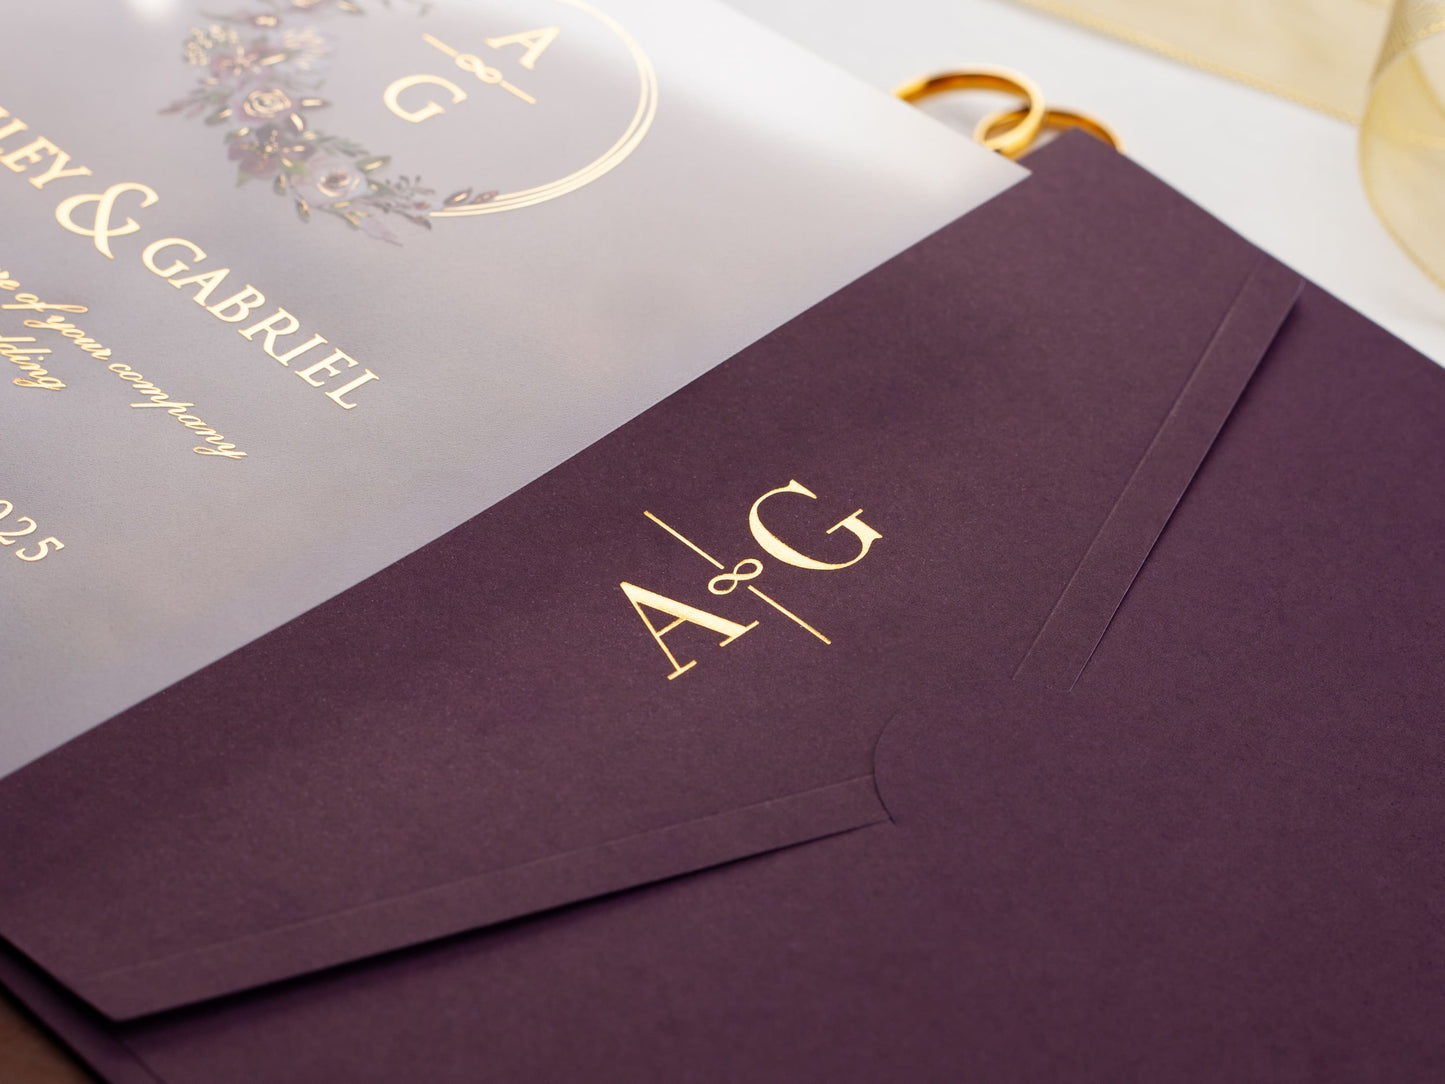 Floral Acrylic Wedding Invitation with Purple Envelope